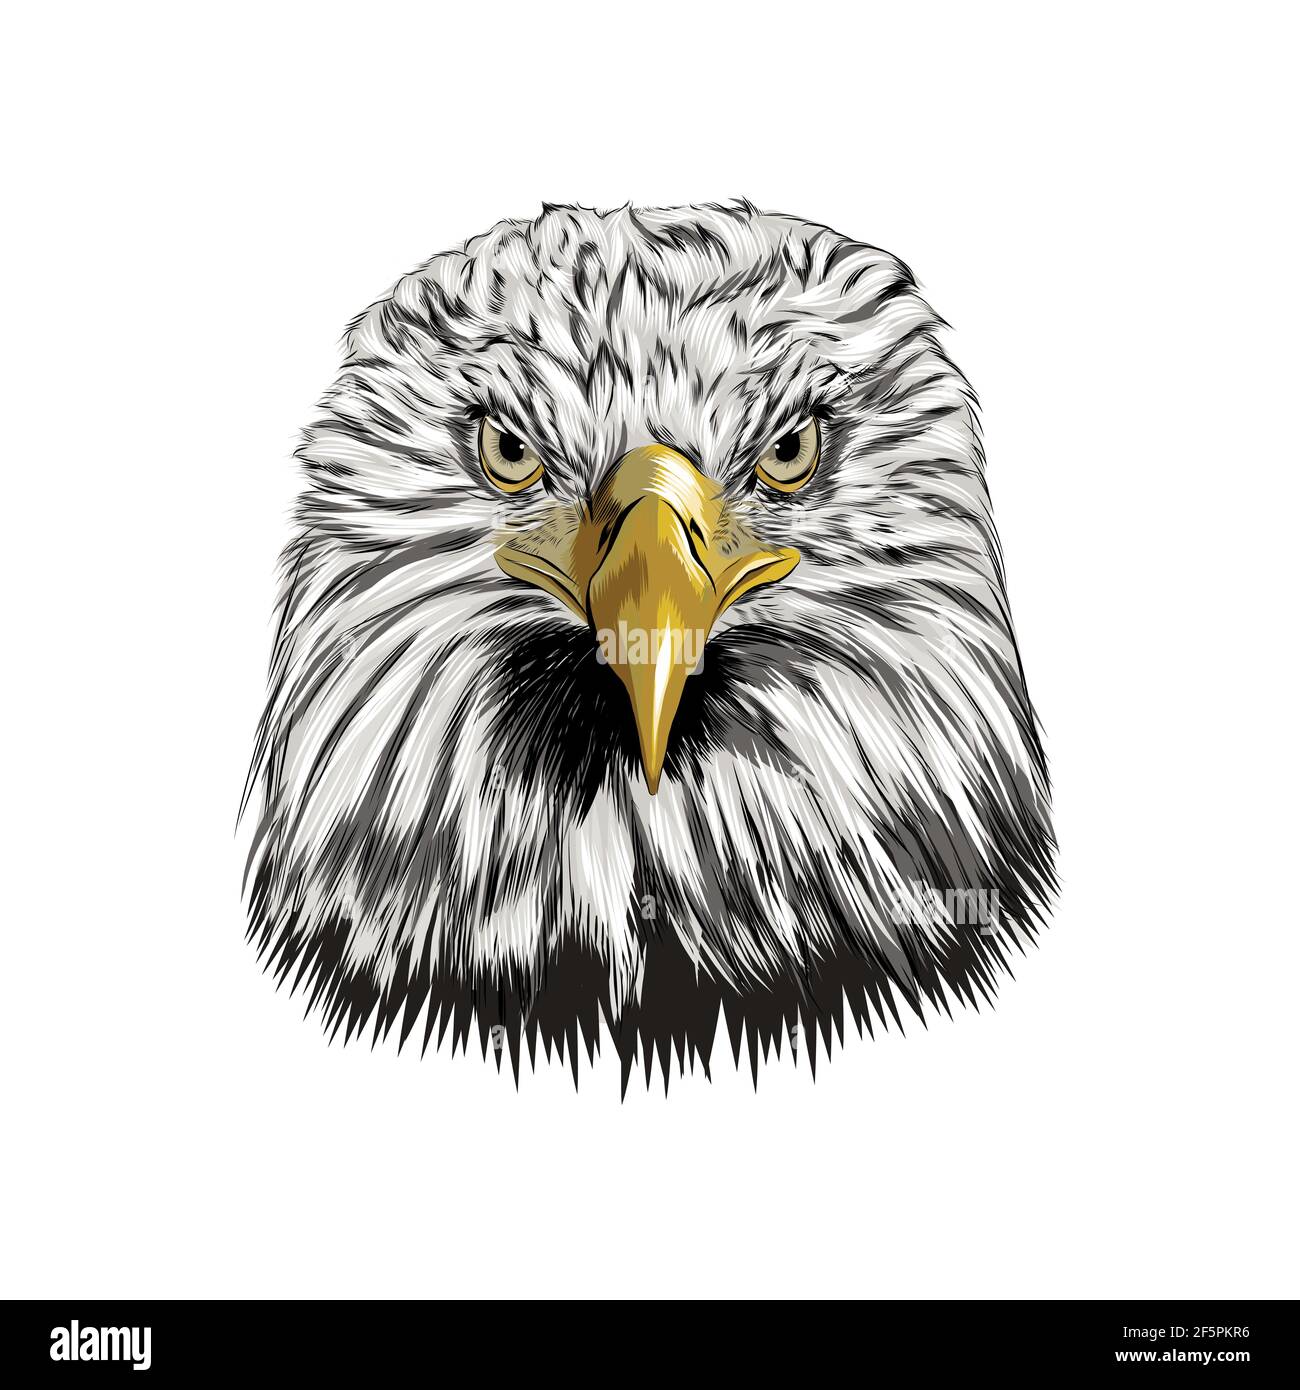 Tattoostarzz - Eagle portrait 🦅 Kartal sevenler parmak kaldırsın 😁 • • •  • #drawing #art #eagle #eagles #bird #wild #sketch #sketching #instaart # realism #realisticdrawing #artwork #nawden #karakalem #blackandwhite  #istanbul #sehatattoos | Facebook